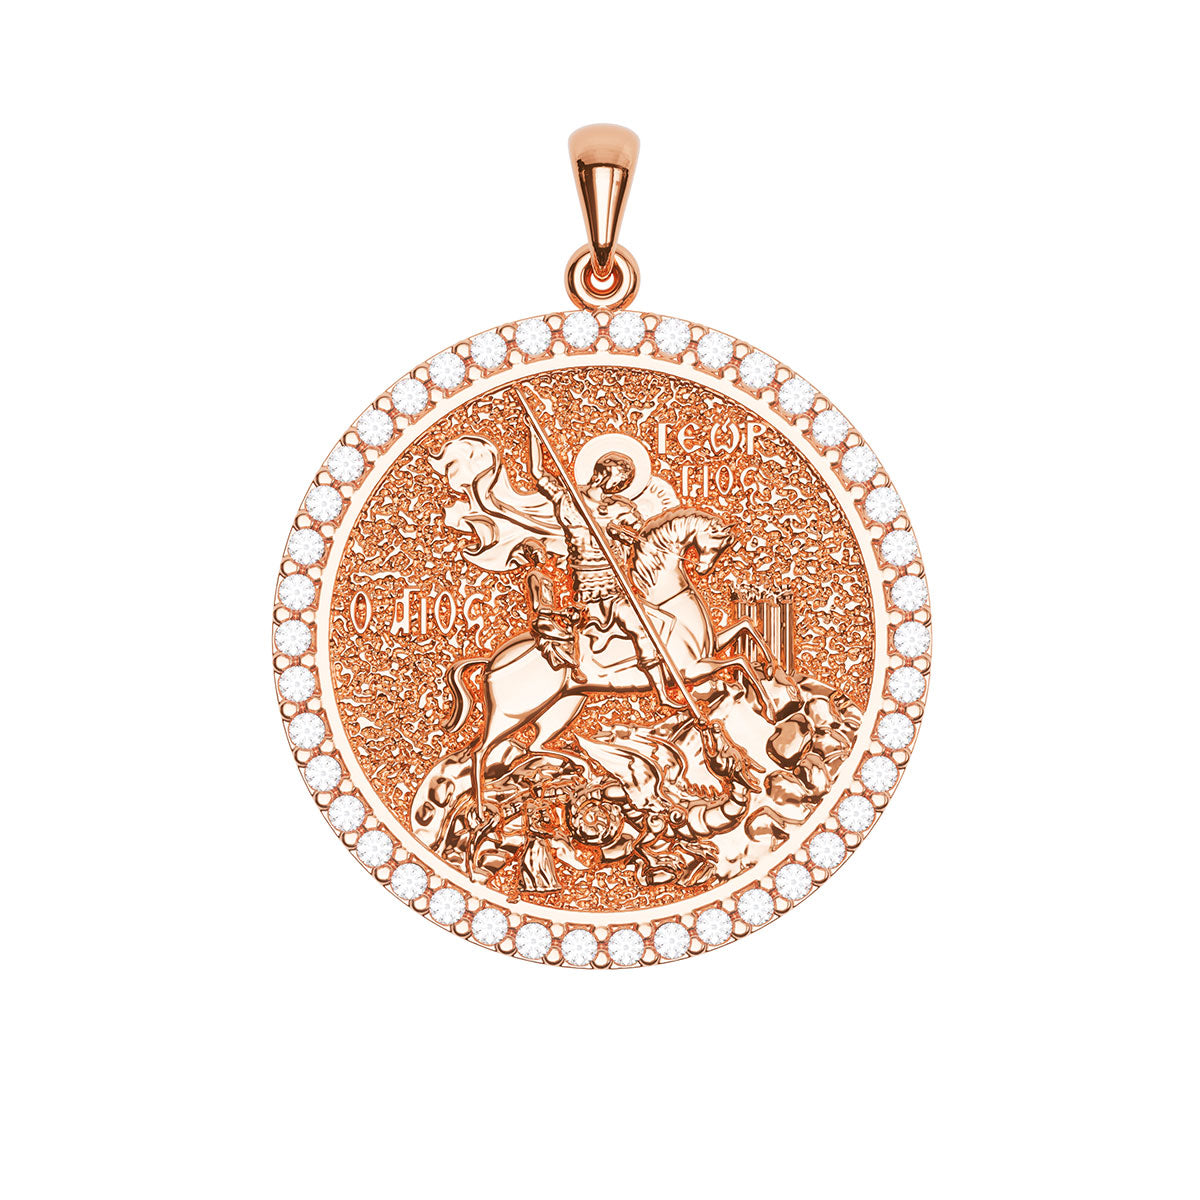 Saint George (Georgios) And the Dragon Sculpted Pavé Round Medal